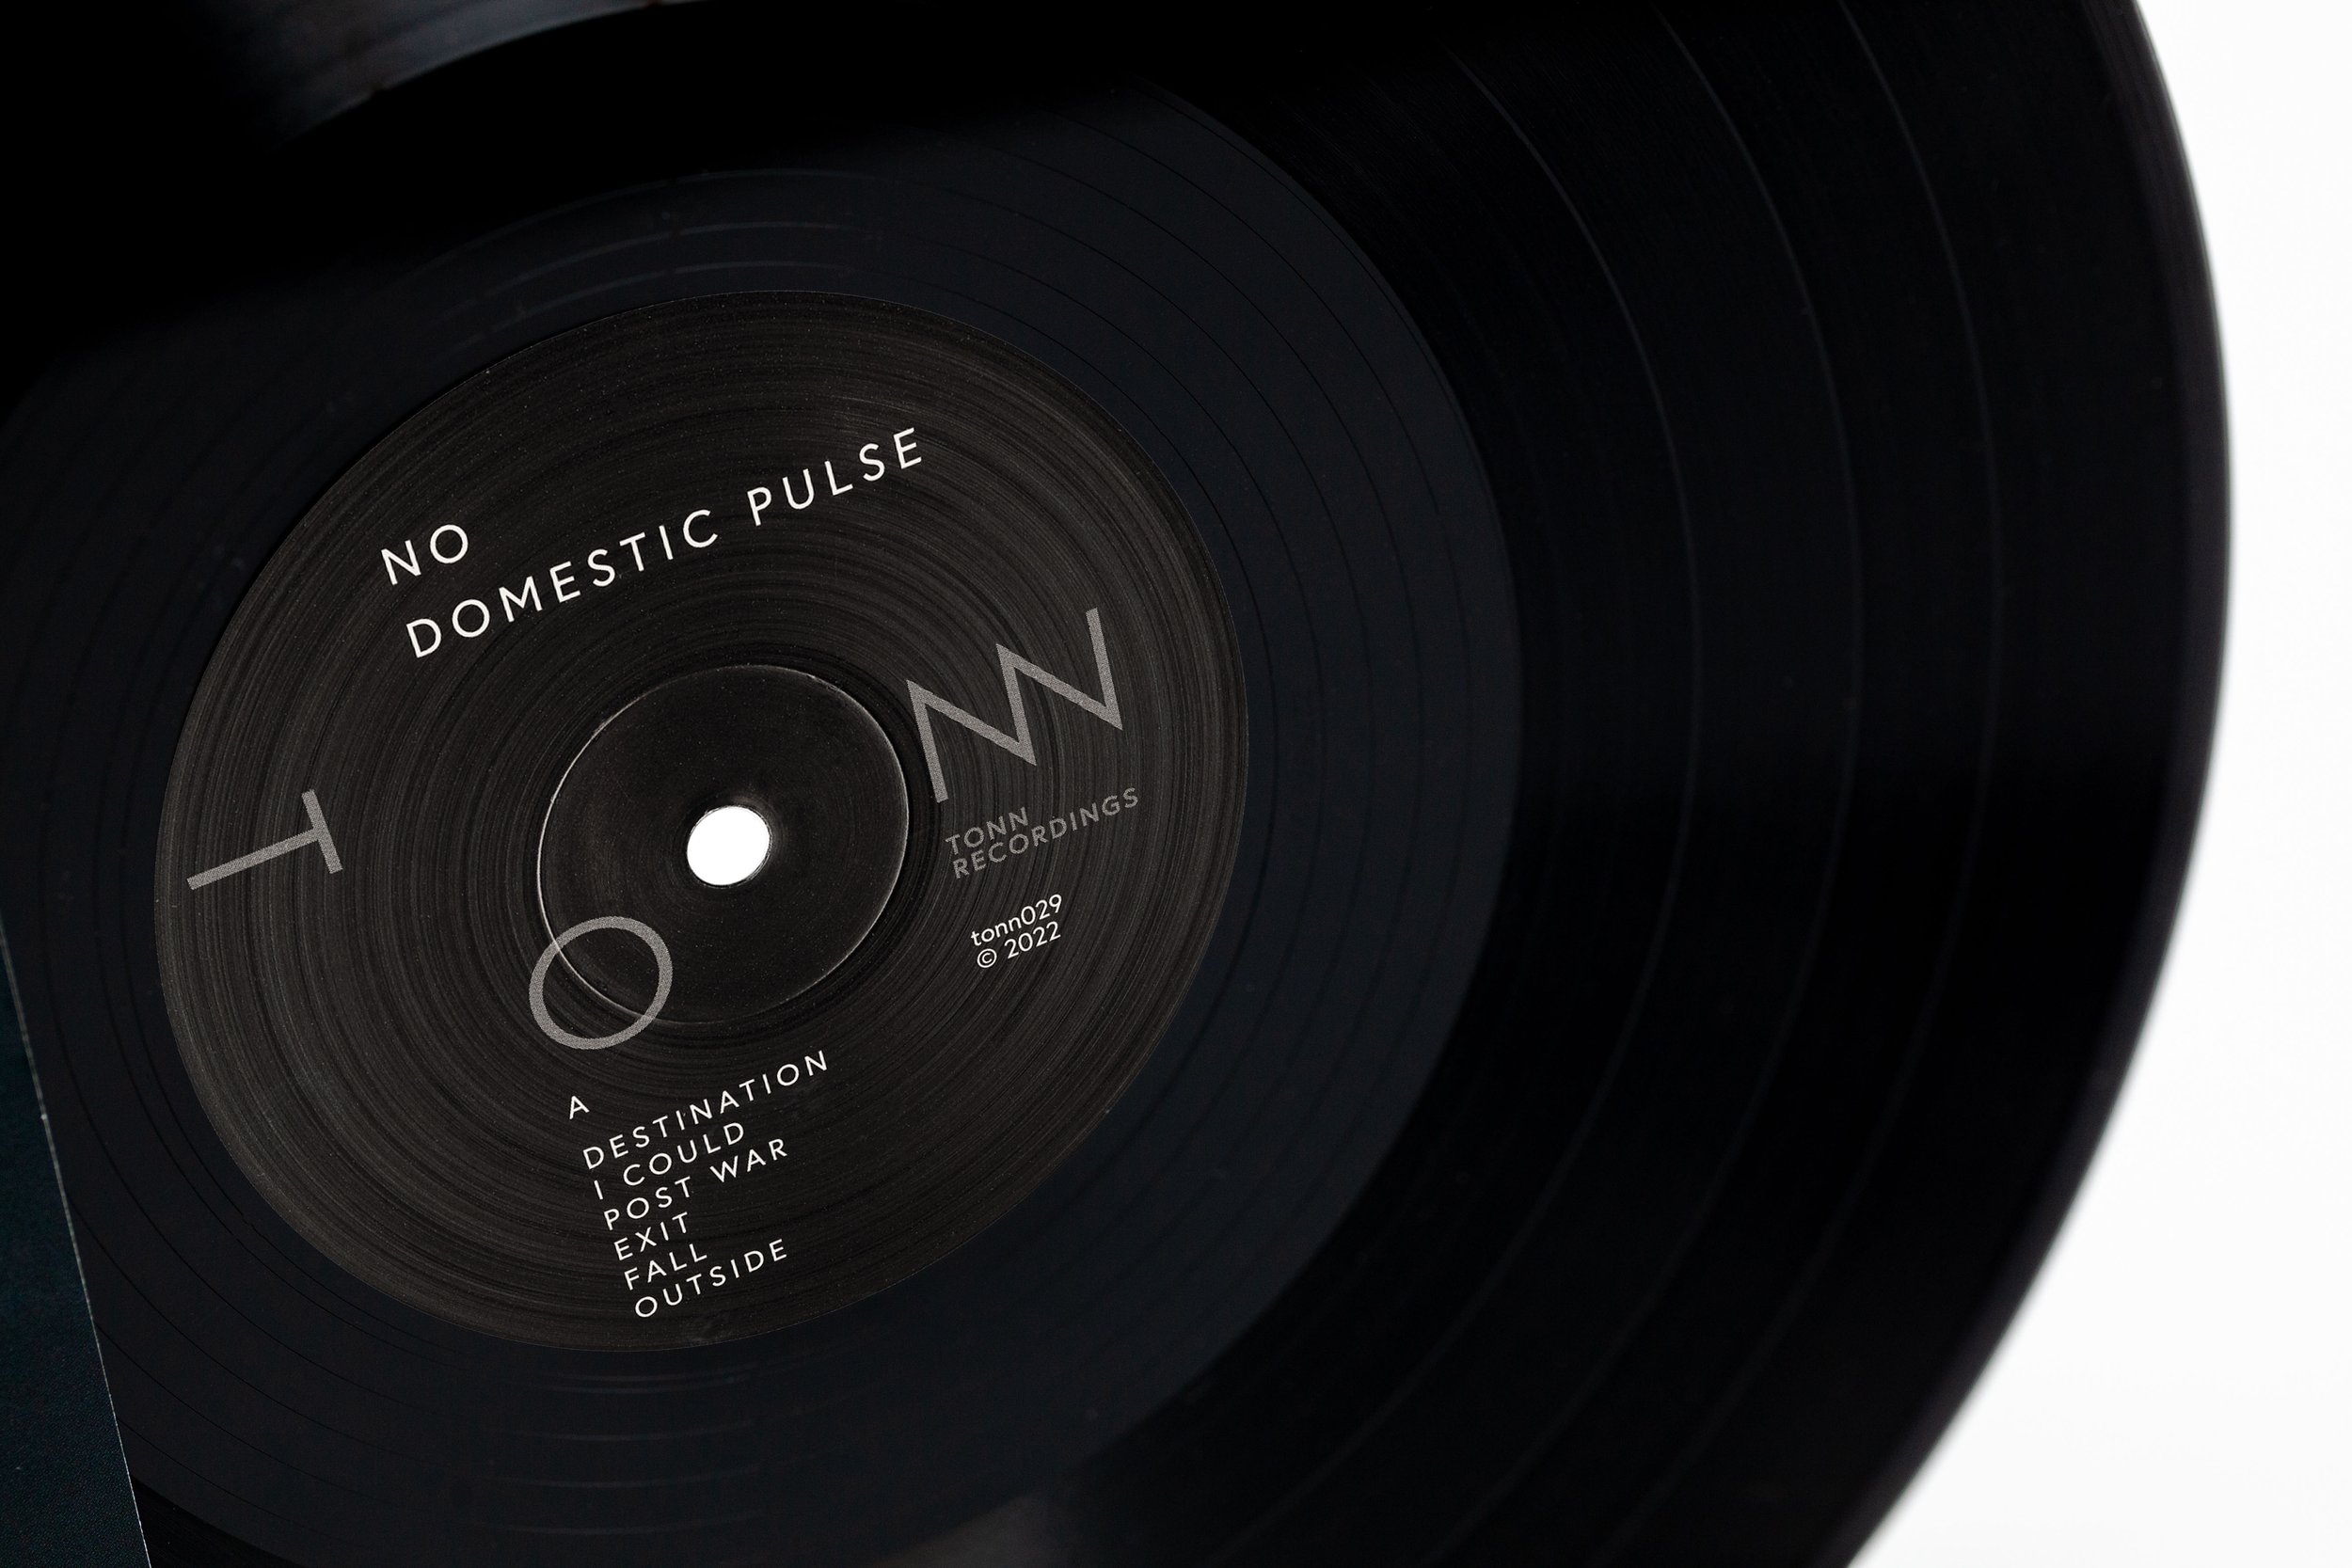 Domestic Pulse No Vinyl TONN Recordings D1.jpg